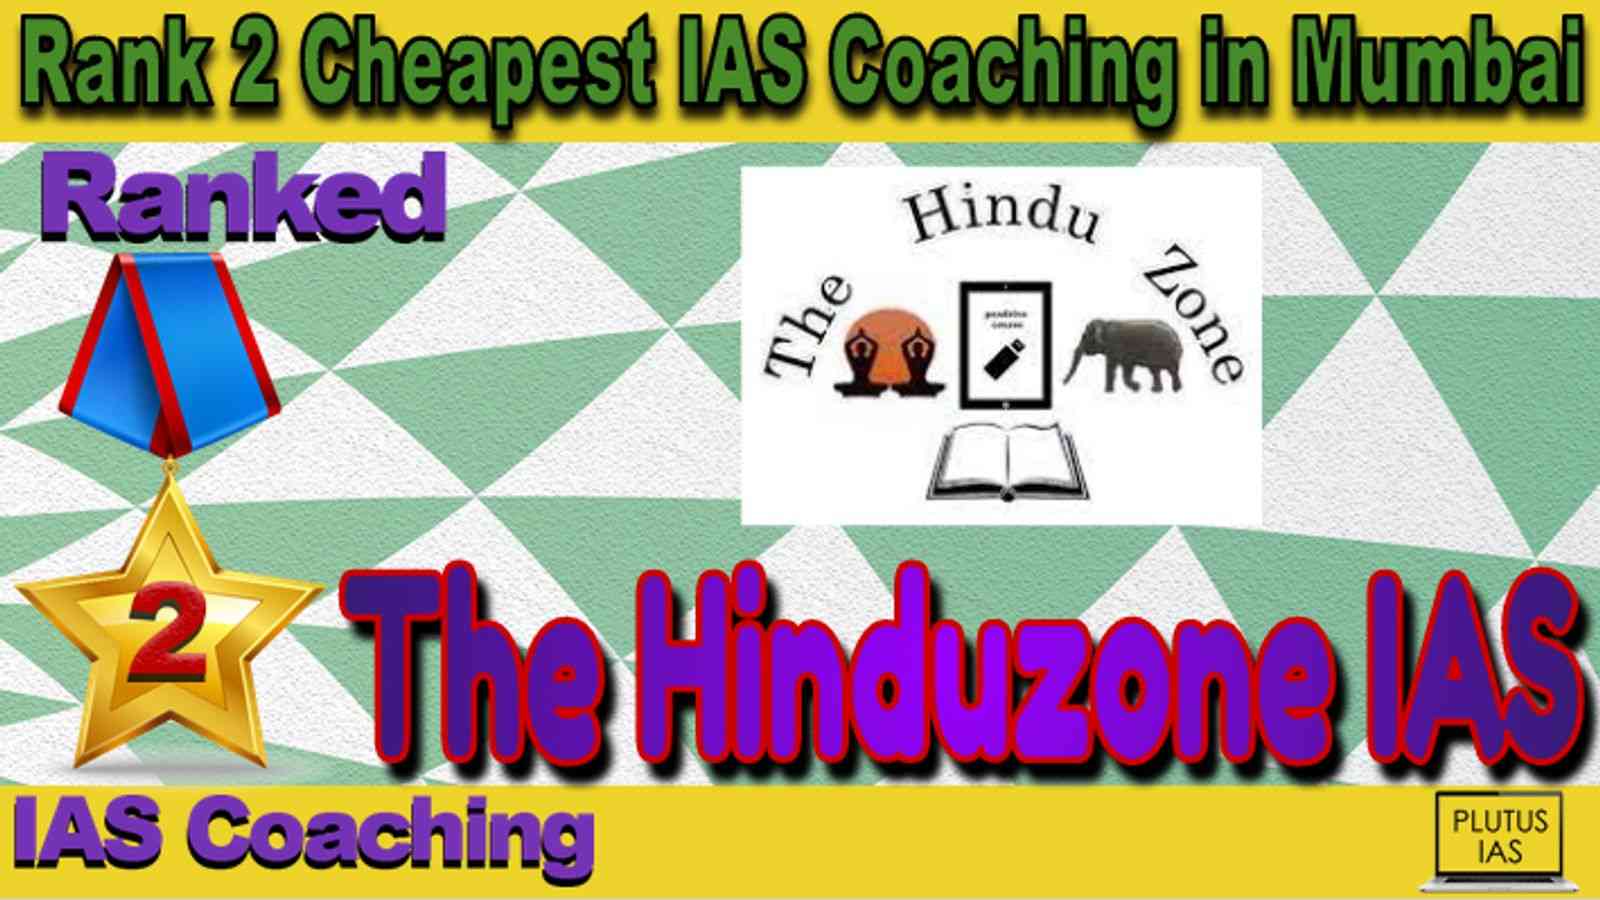 Rank 2 Cheapest IAS Coaching in Mumbai